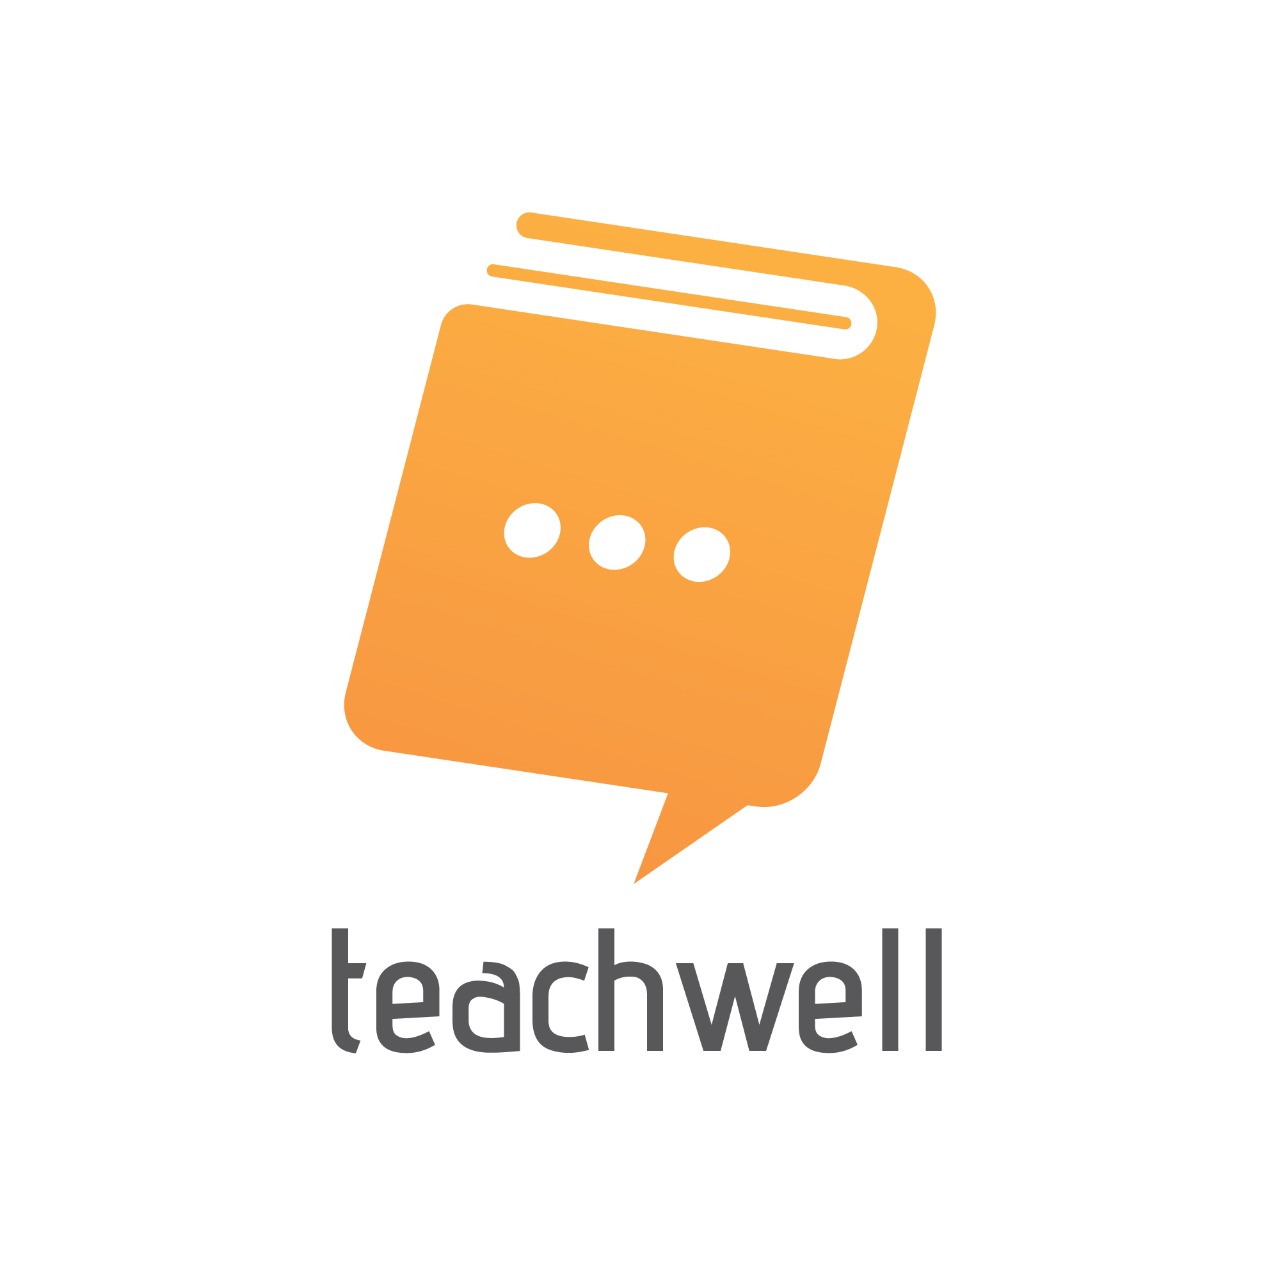 Teachwell logo 